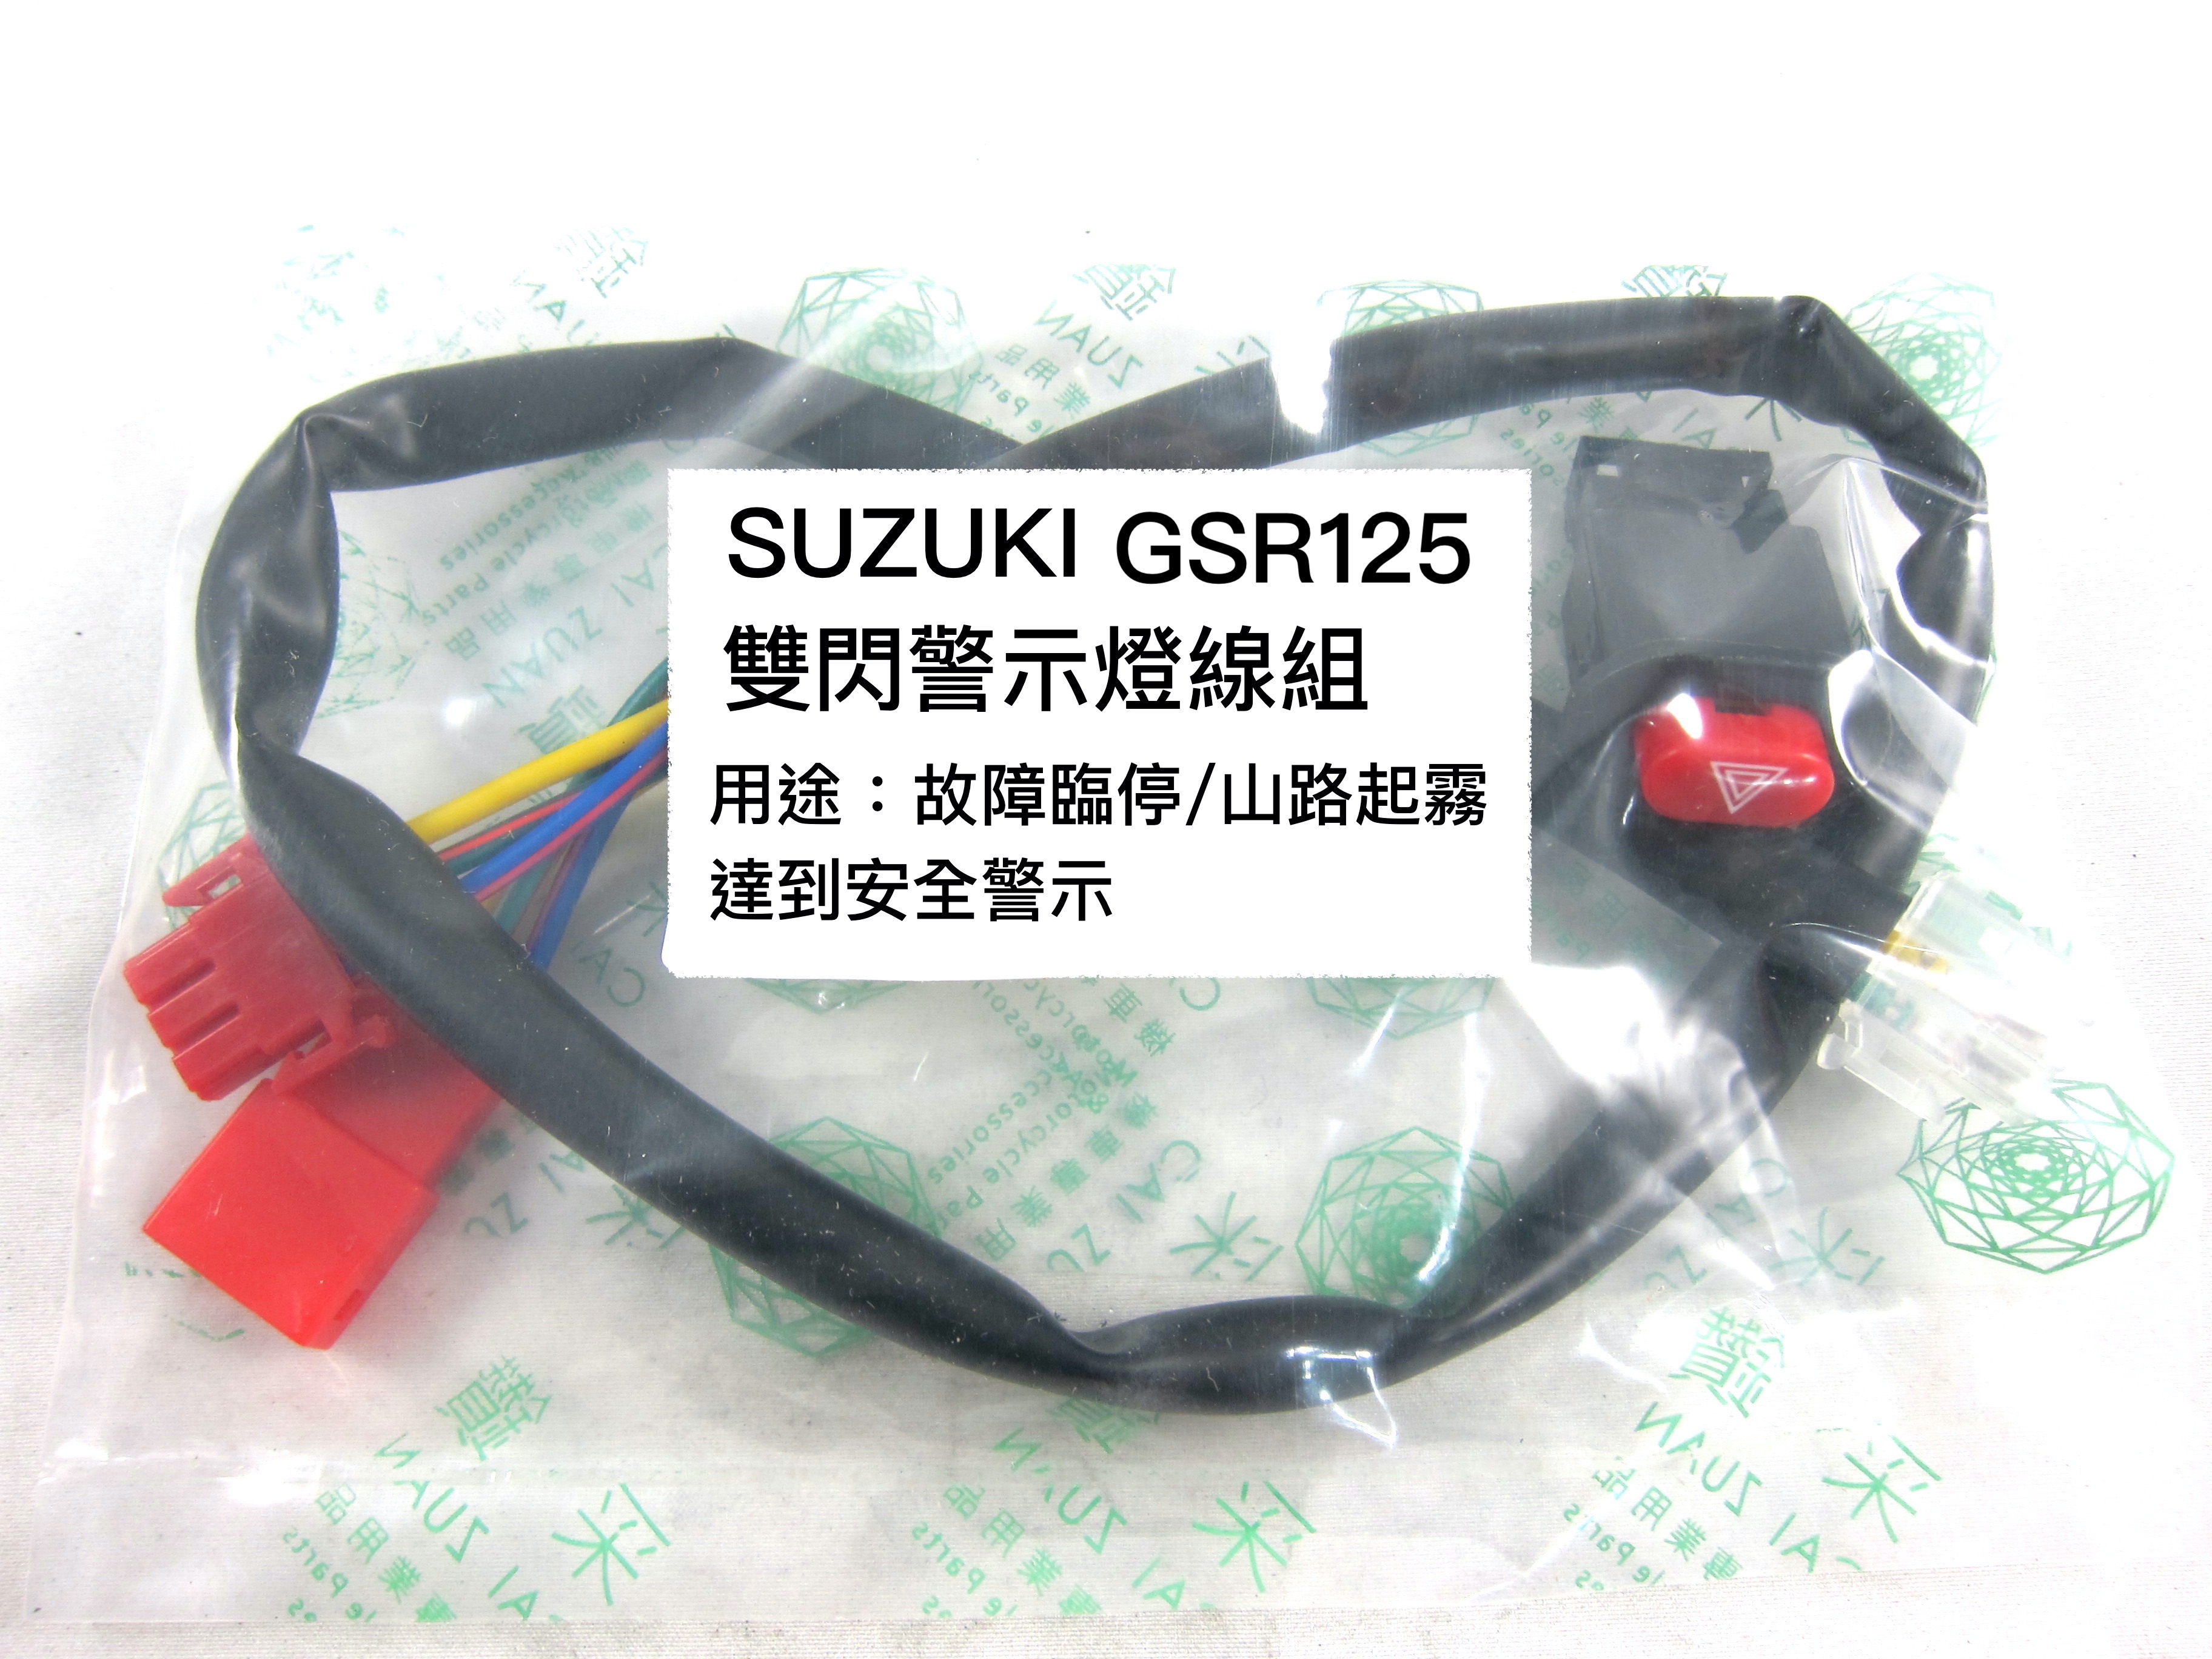 SUZUKI GSR125機車警示燈功能線組+開關 按雙閃提醒後方來車 警示功能 與汽車相同概念 采鑽公司貨